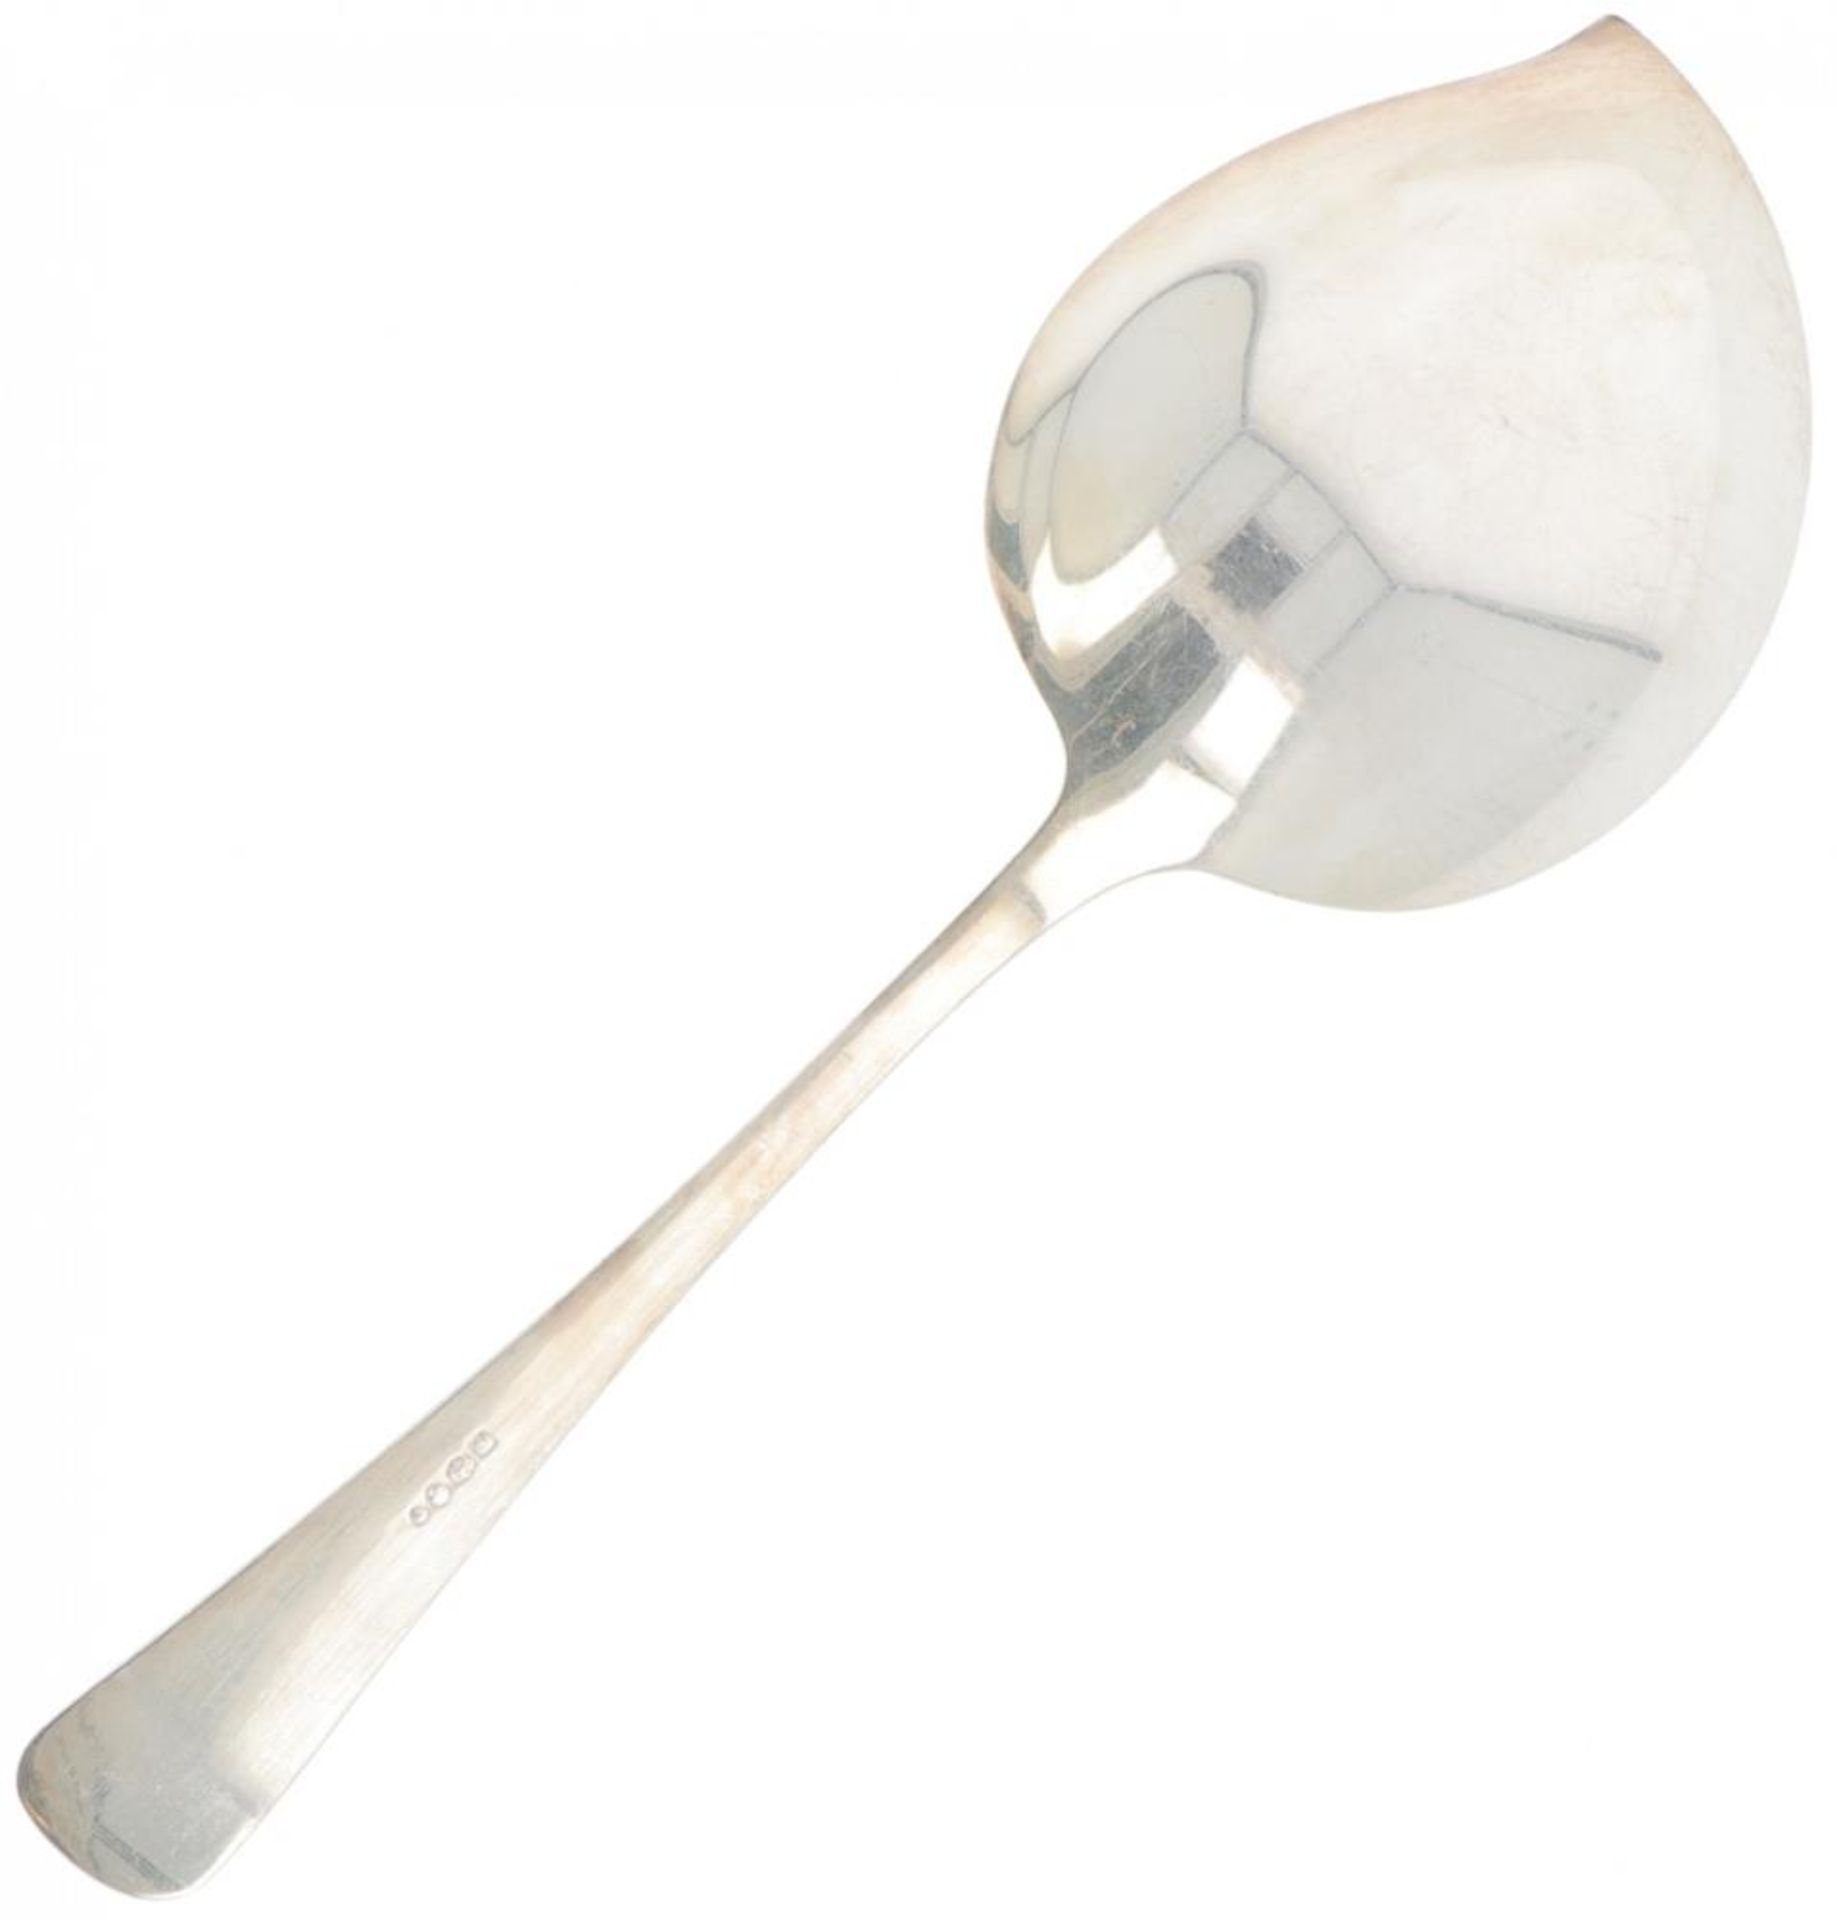 Custard spoon "Haags Lofje" silver. - Image 2 of 3